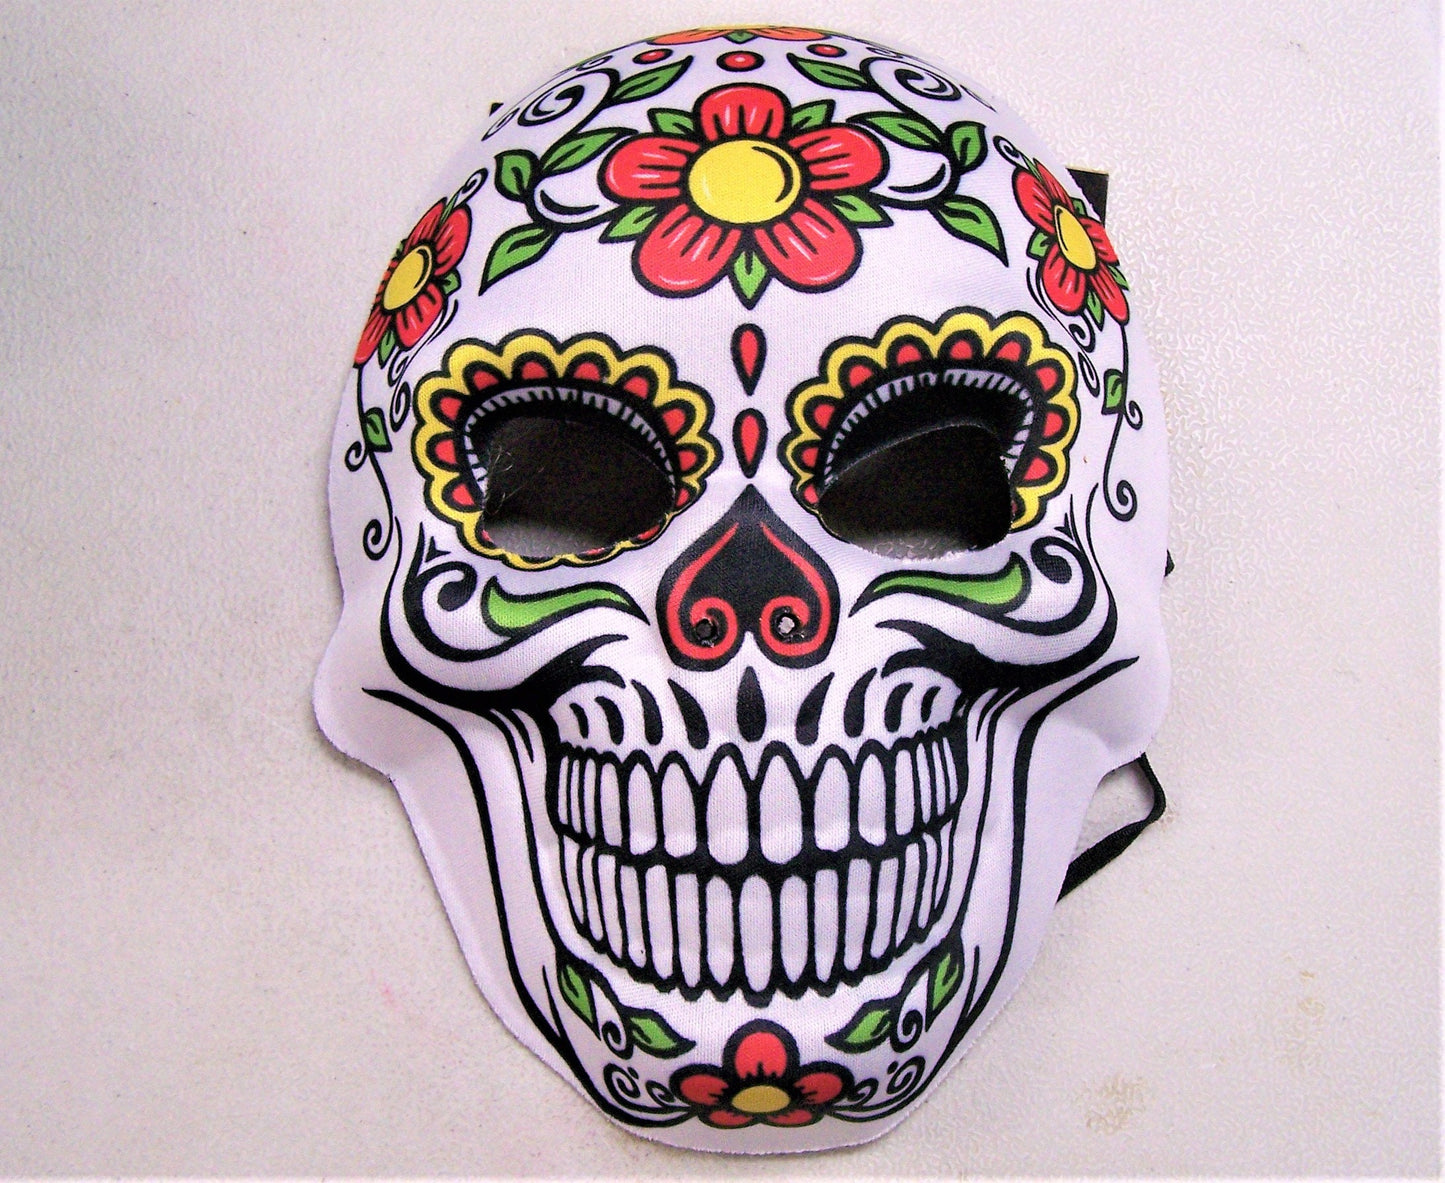 Day of the Dead Sugar Skull Neoprene Halloween Mask - Flowers #1 - Dia de los Muertos